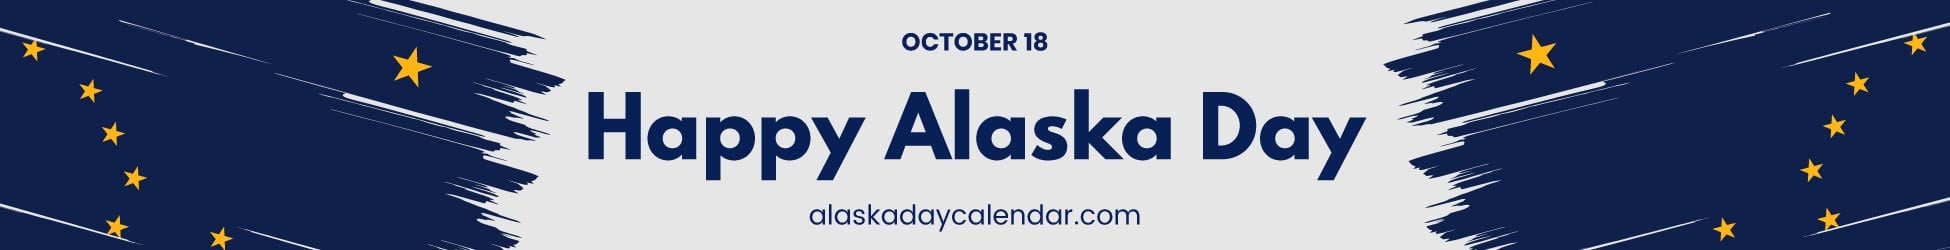 Alaska Day Website Banner